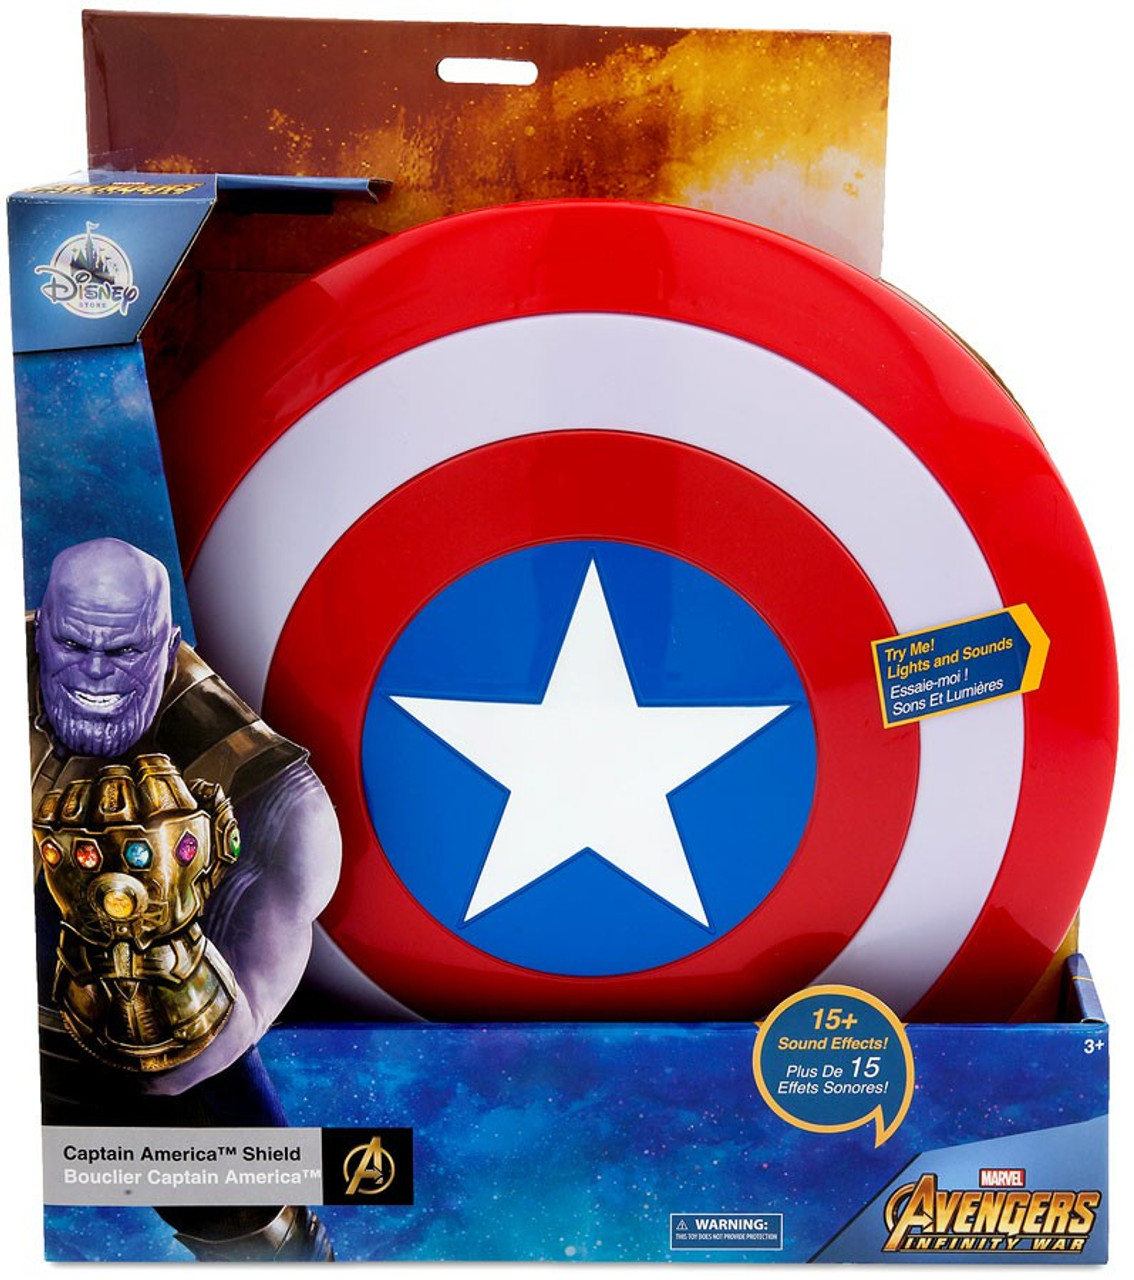 avengers captain america shield toy